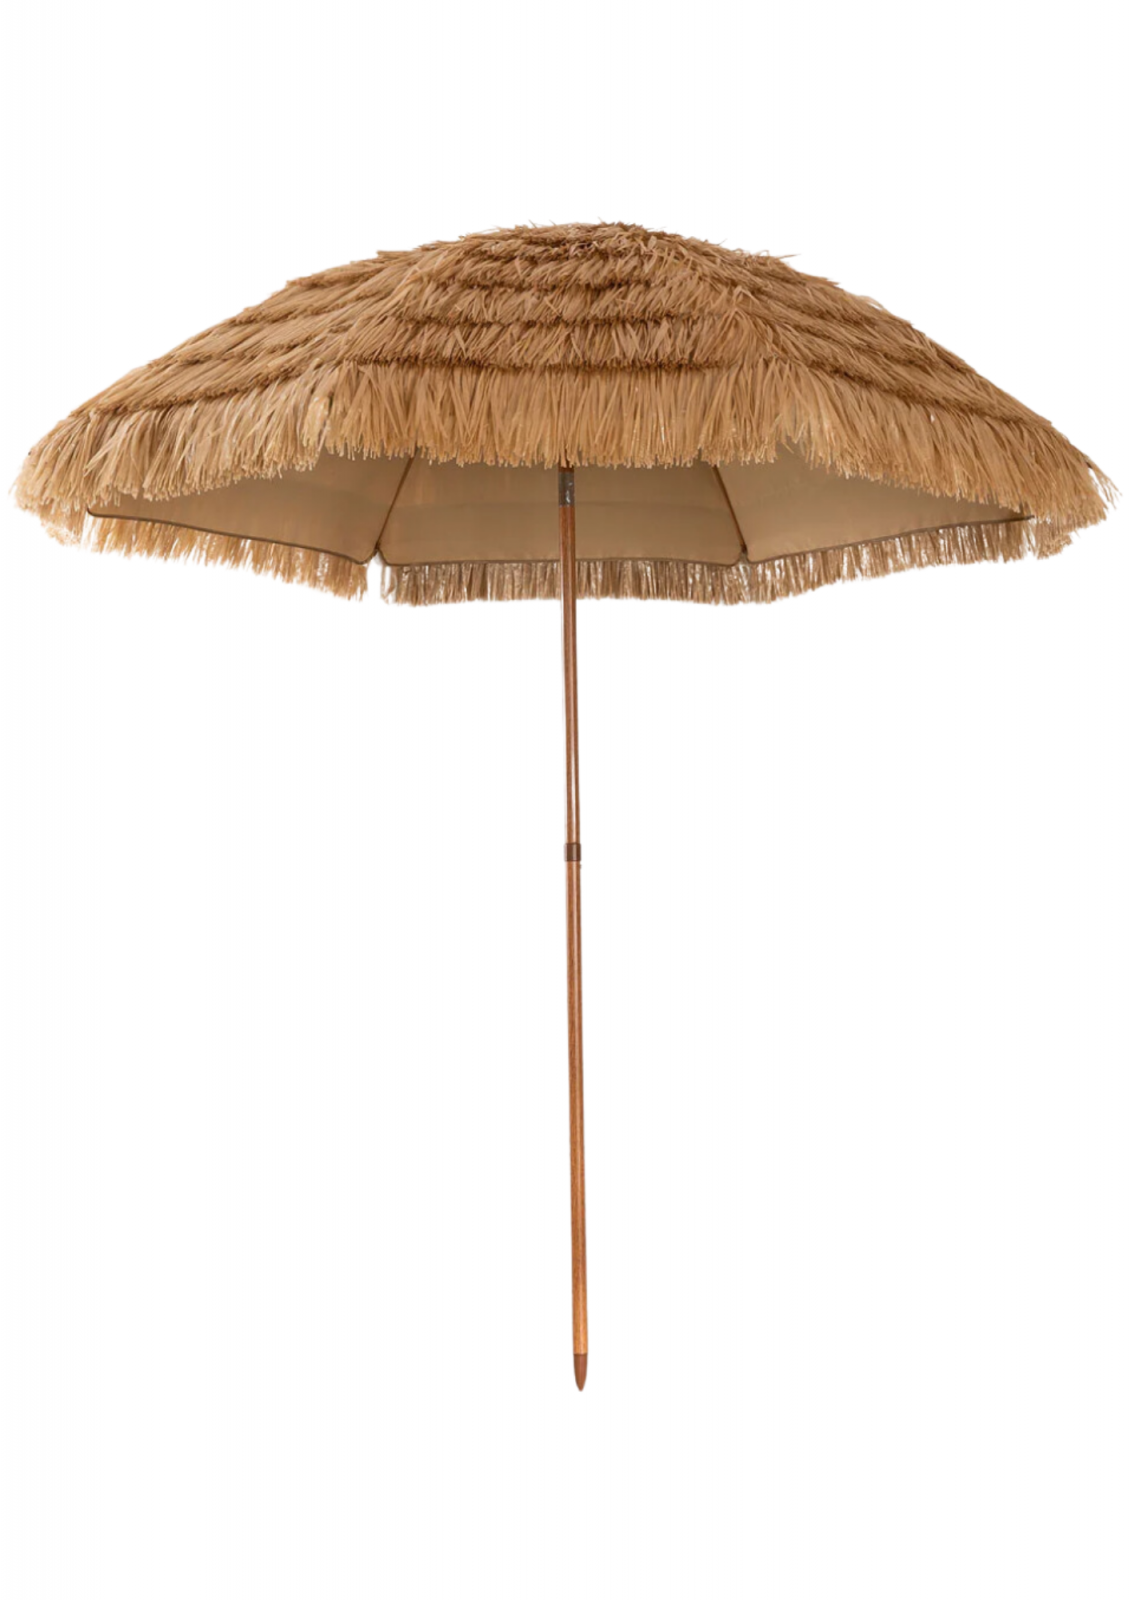 Beach umbrella rental